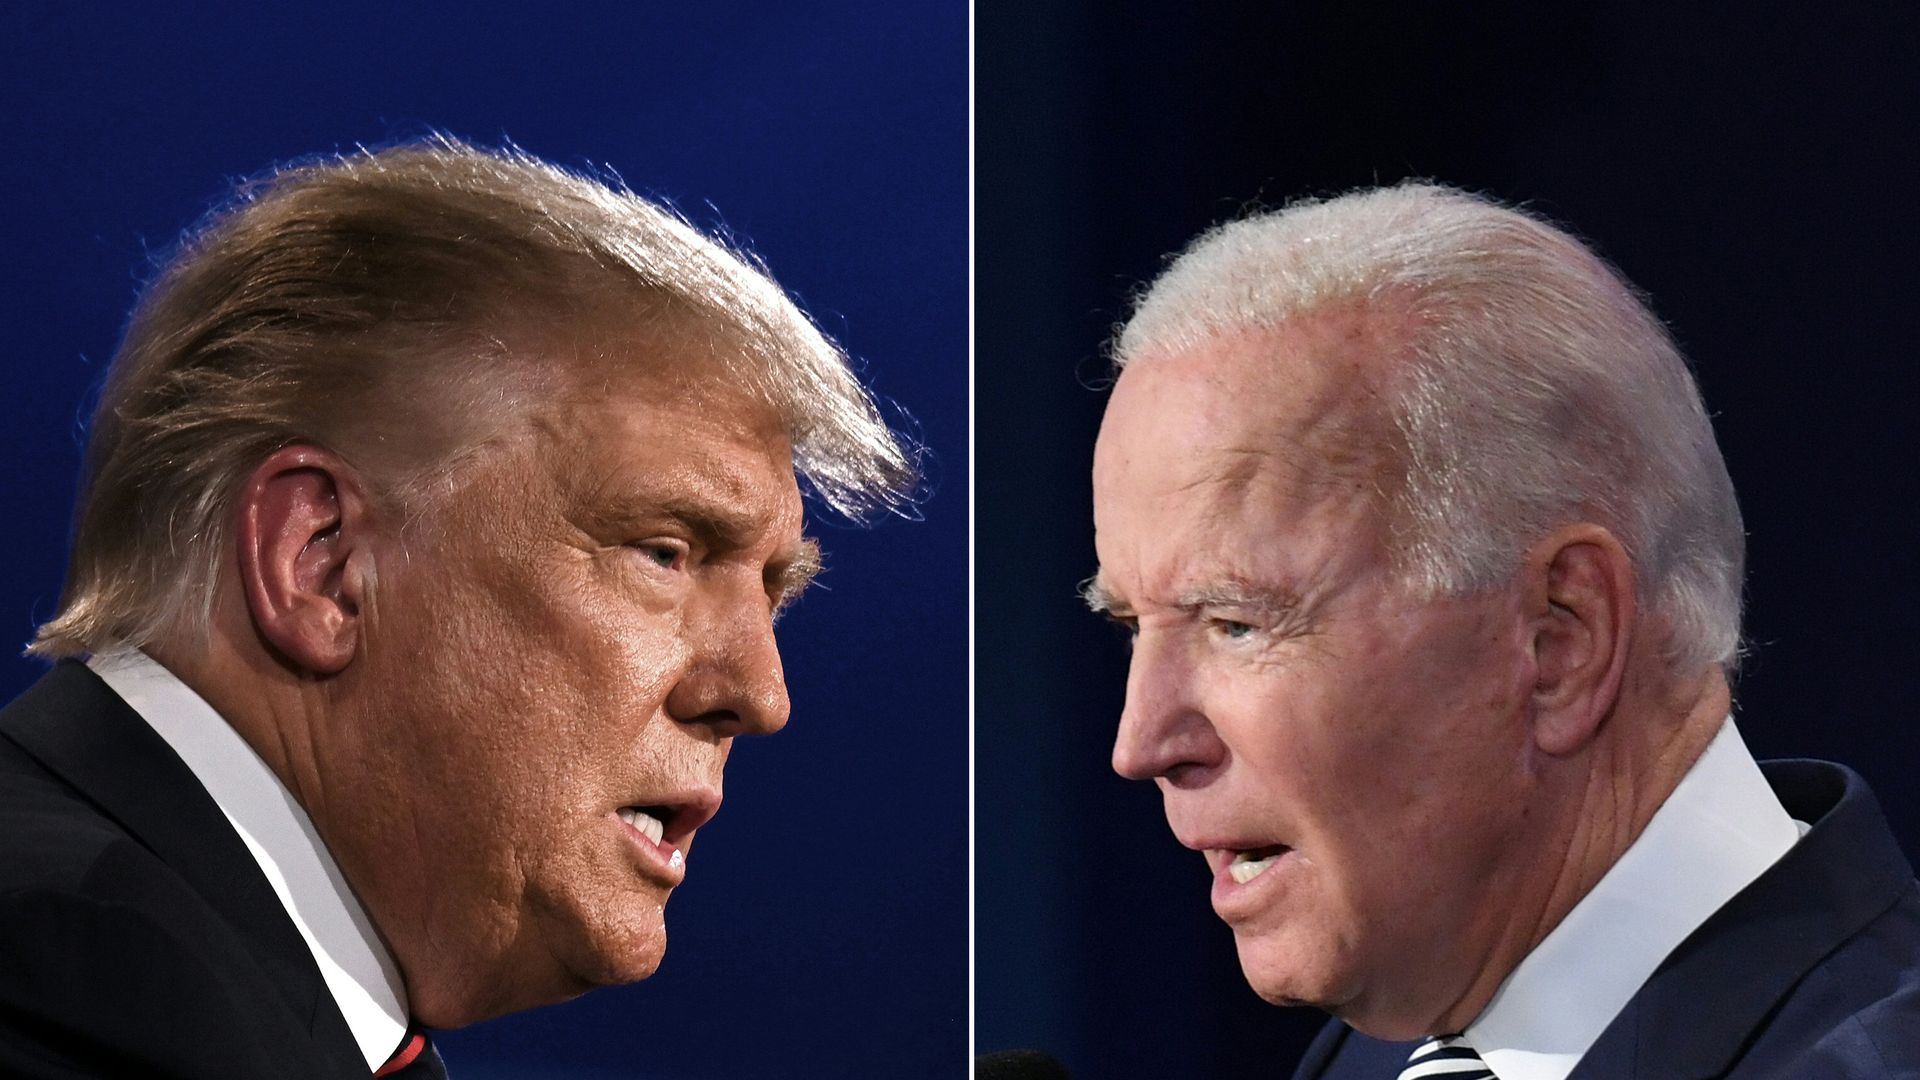 President Trump and Biden at the debate 